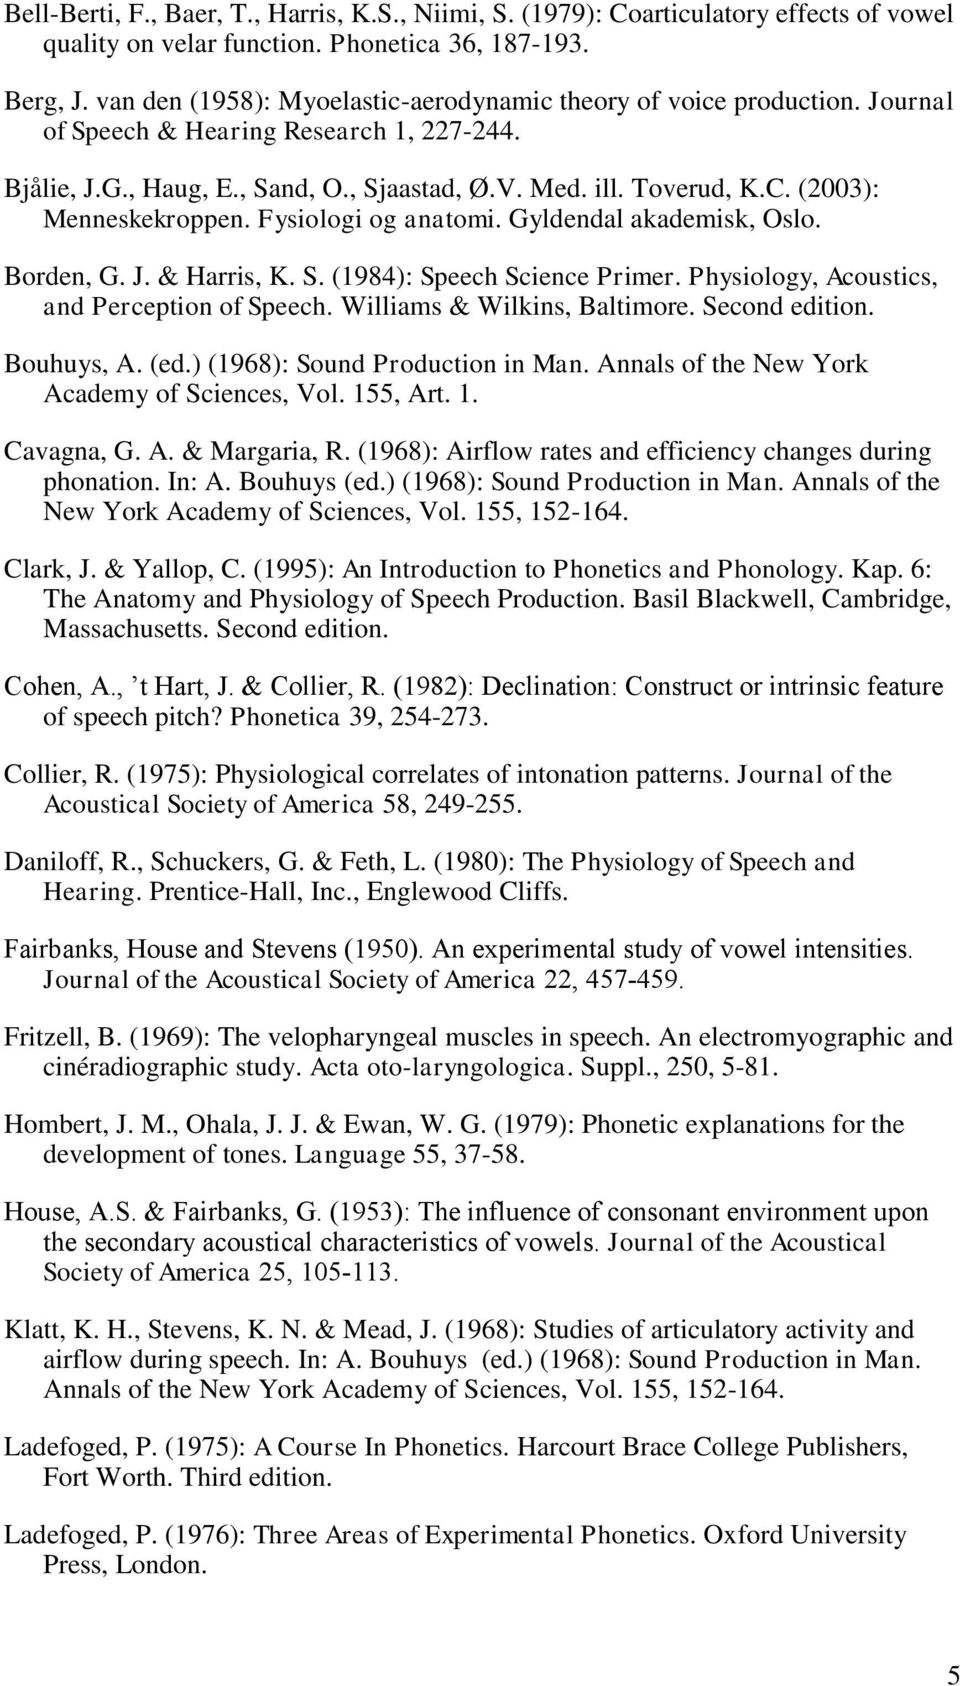 (2003): Menneskekroppen. Fysiologi og anatomi. Gyldendal akademisk, Oslo. Borden, G. J. & Harris, K. S. (1984): Speech Science Primer. Physiology, Acoustics, and Perception of Speech.